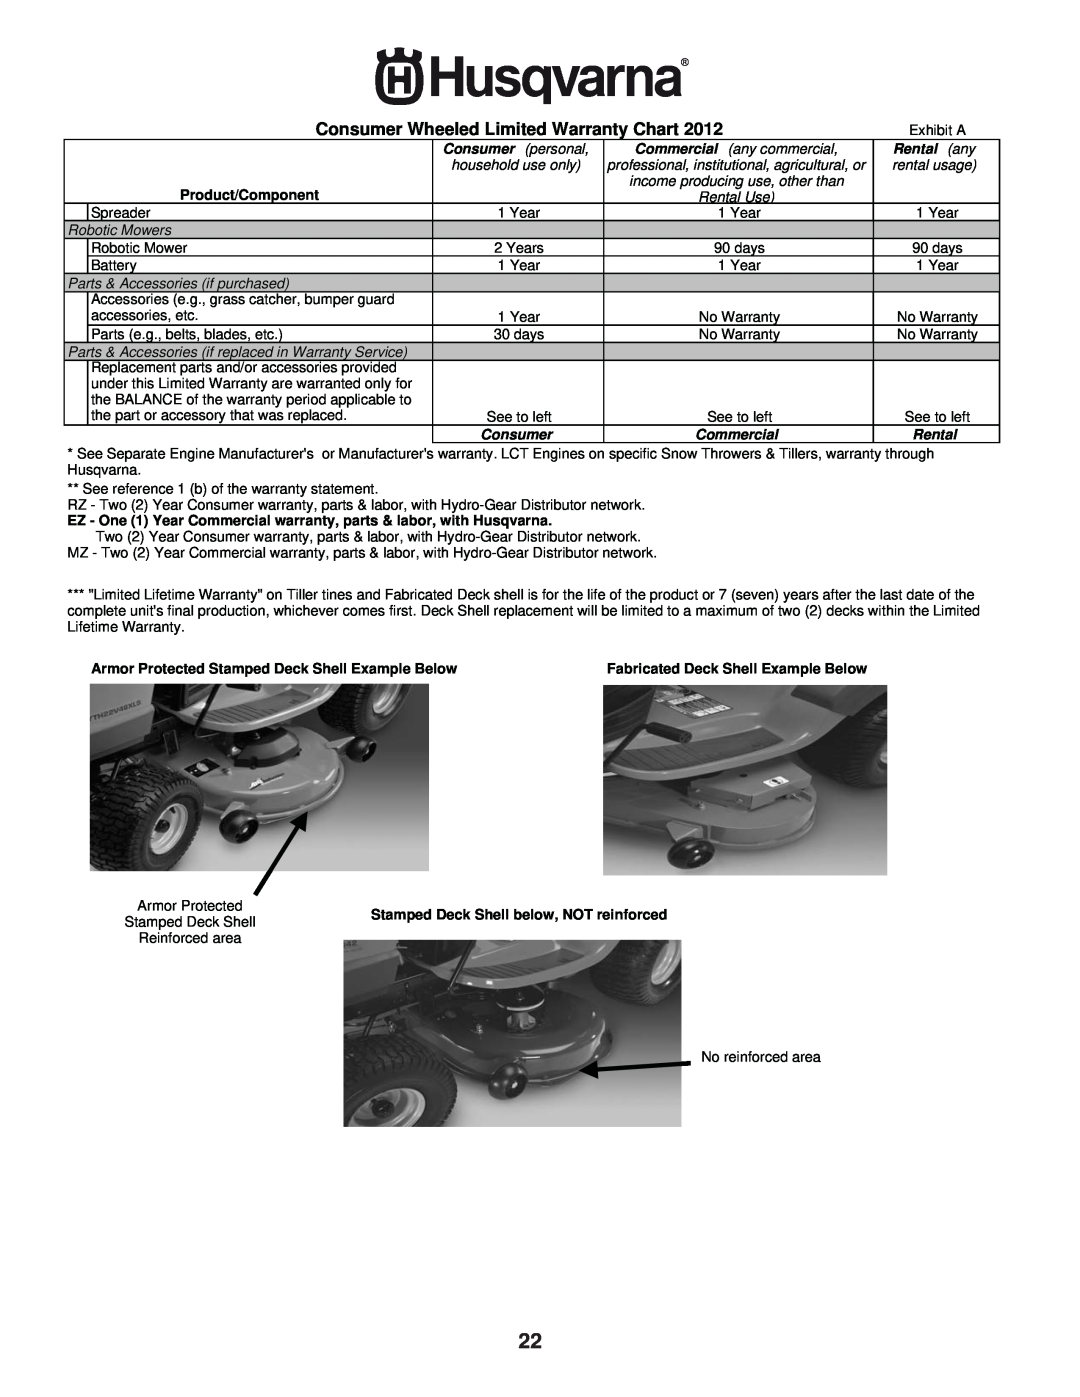 Husqvarna 961430096 warranty Consumer Wheeled Limited Warranty Chart, Rental any, Product/Component 